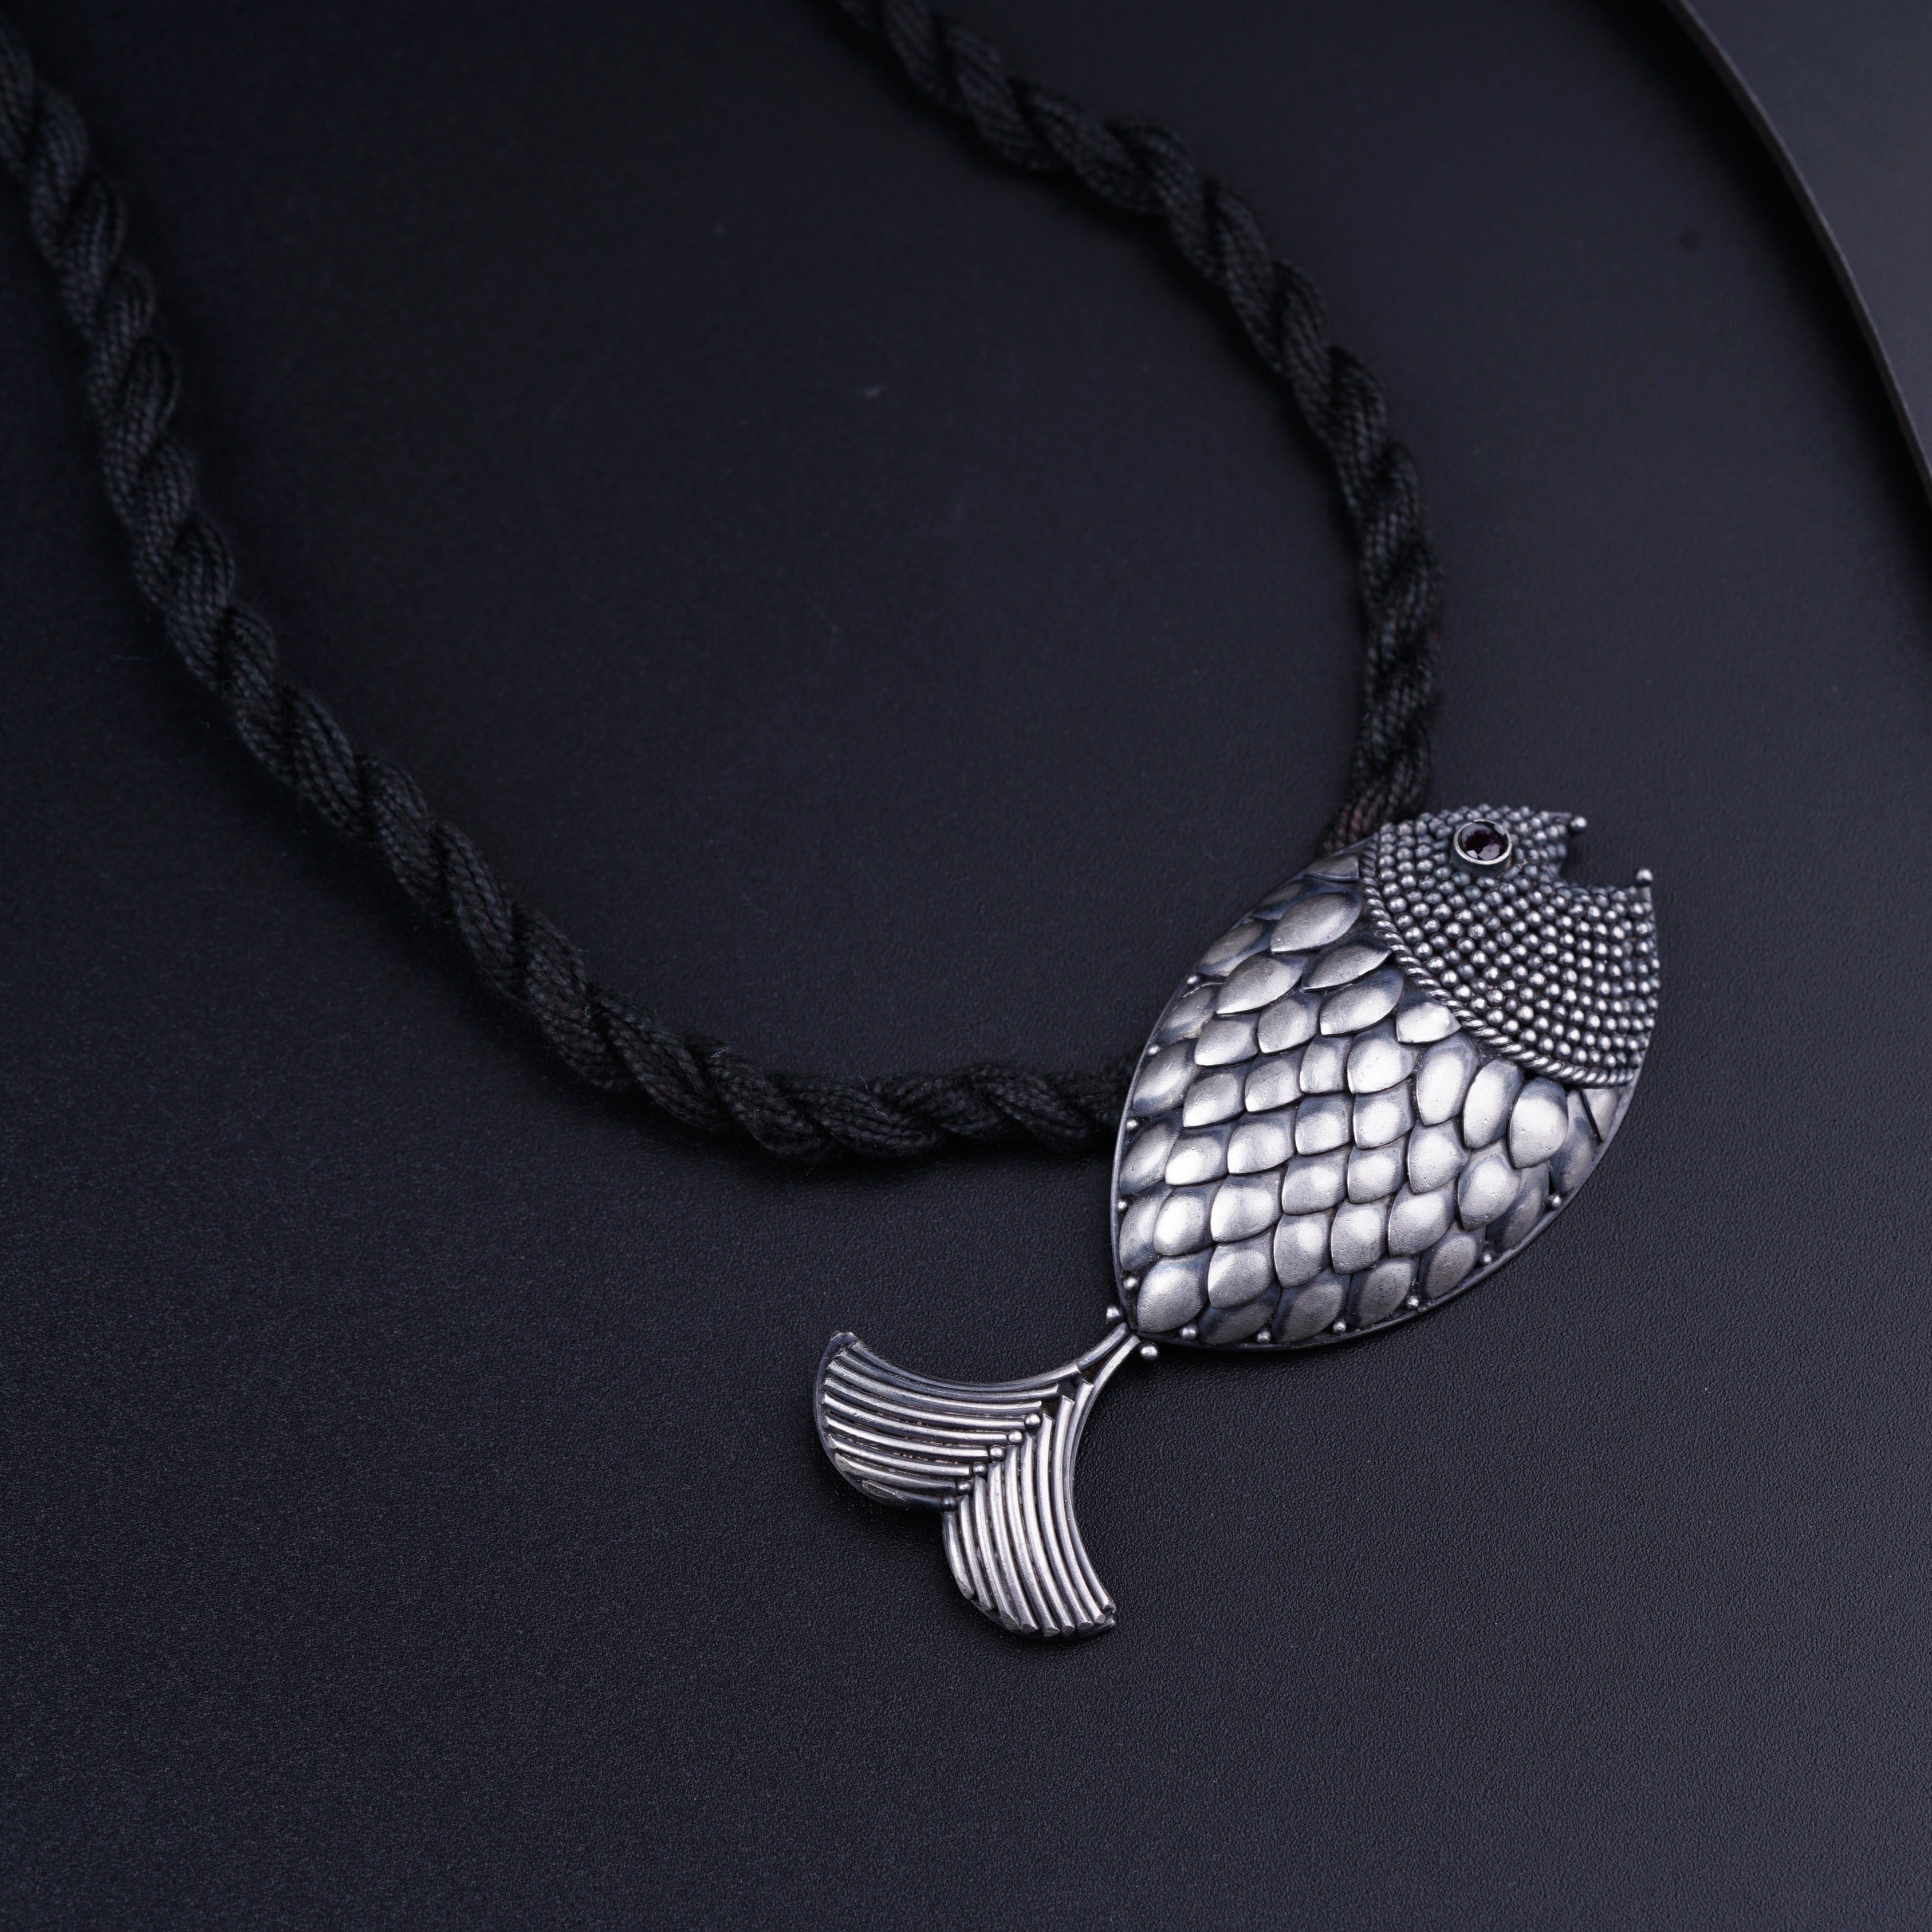 a silver fish pendant on a black cord